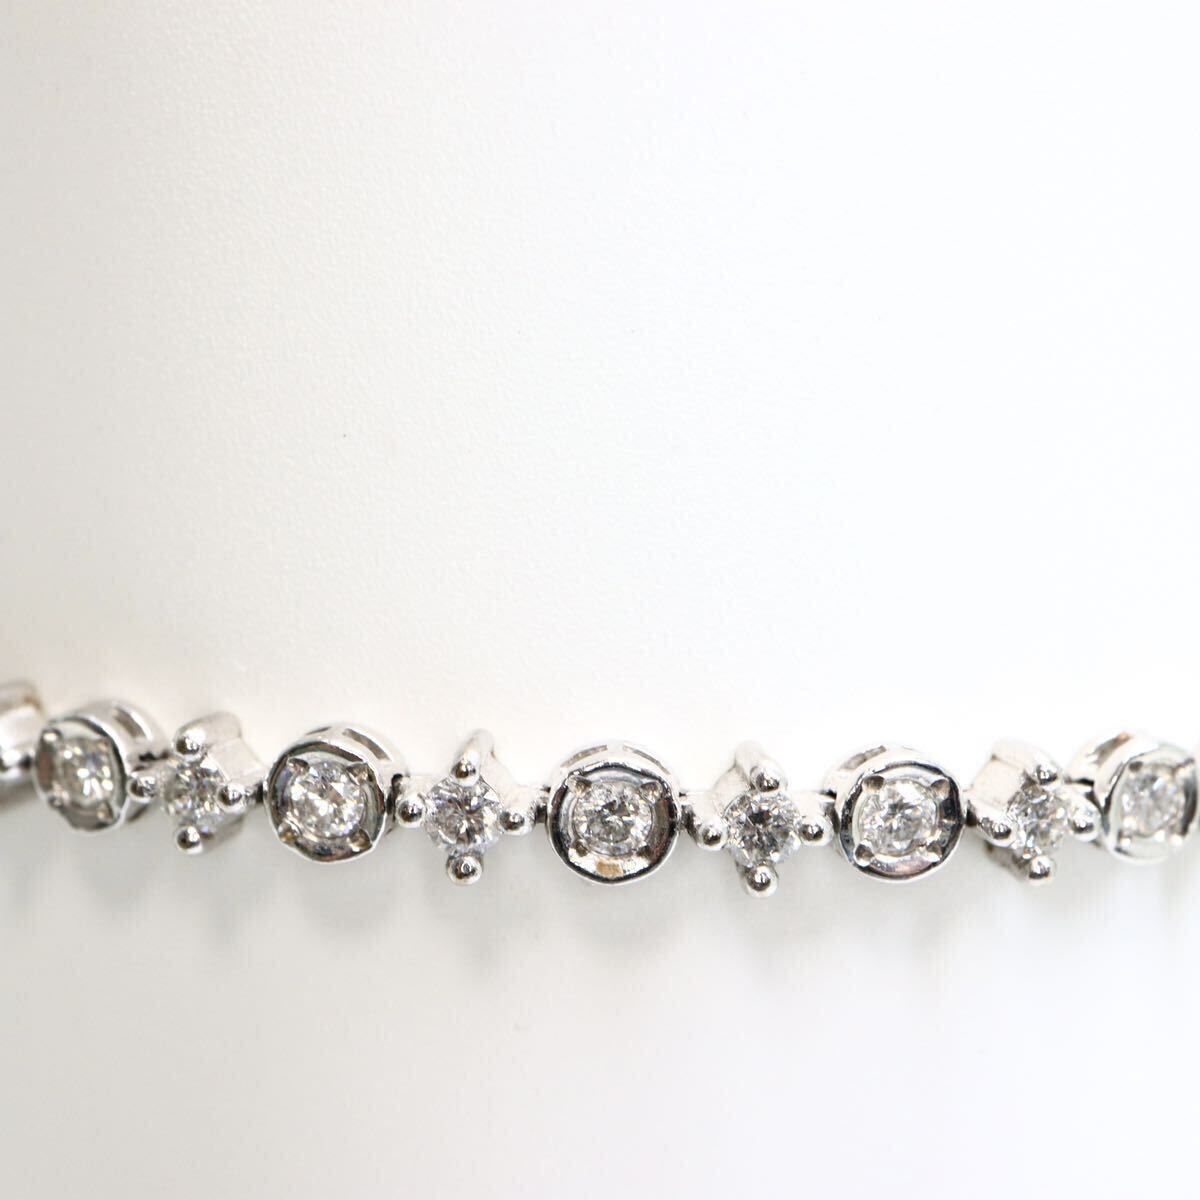 DE BEERS(デビアス)LINE(ライン)1ct UP!!《K18WG 天然ダイヤモンドブレスレット》M 約7.7g 約16cm 1.38ct diamond bracelet EH6/FA1の画像5